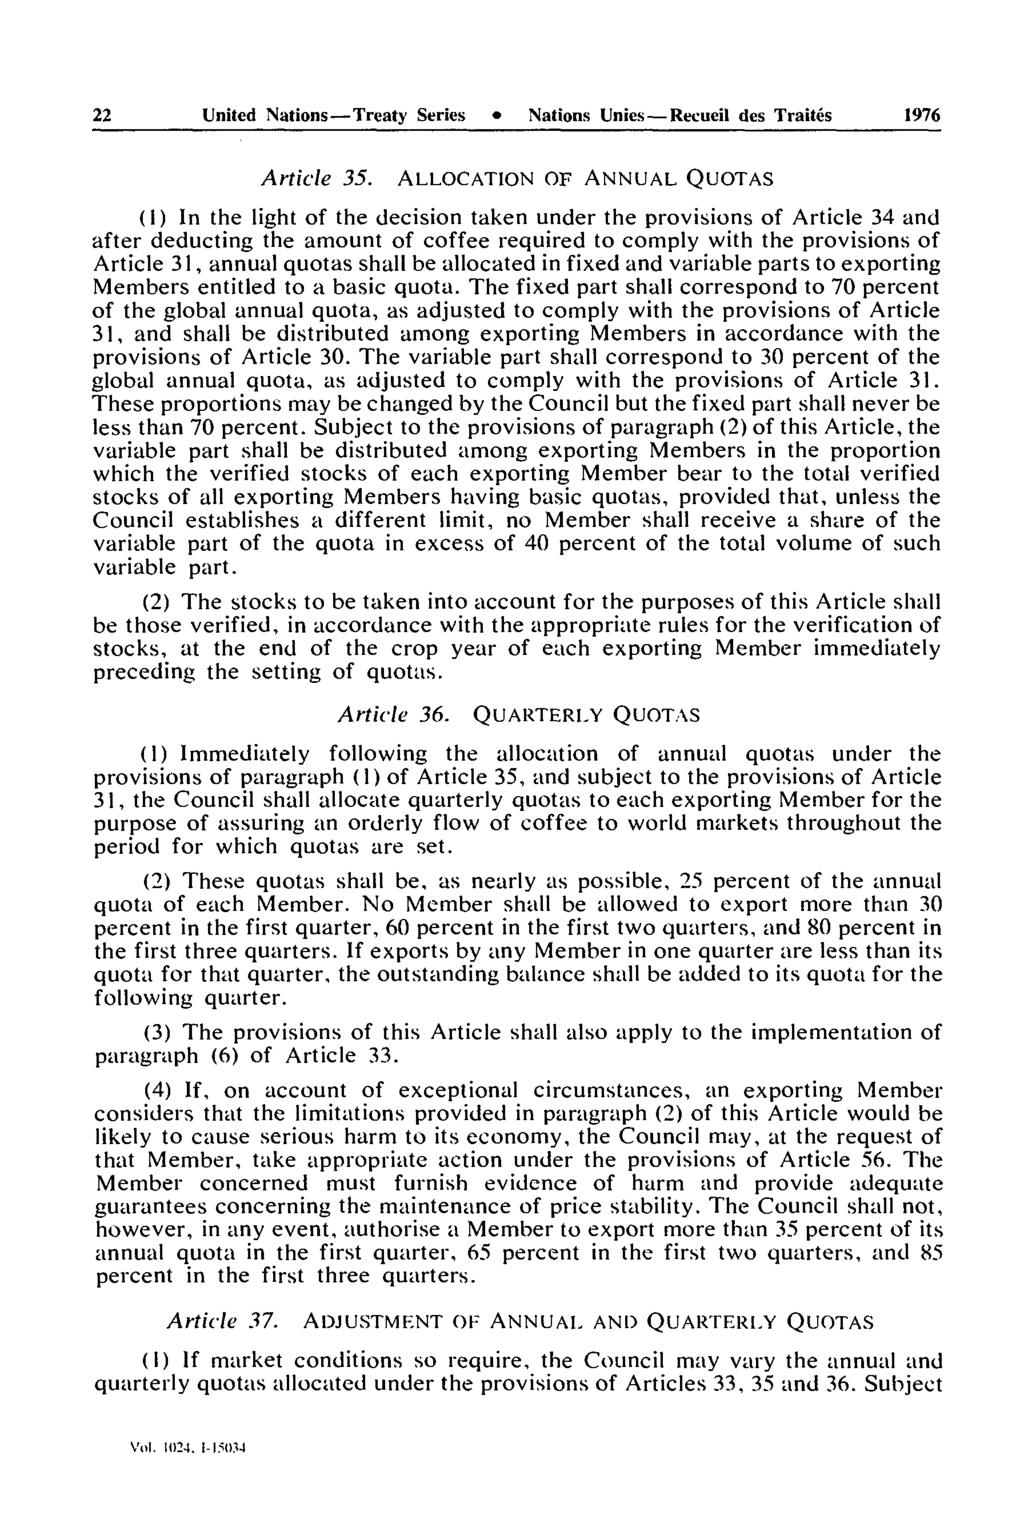 22 United Nations Treaty Series Nations Unies Recueil des Traités Article 35.